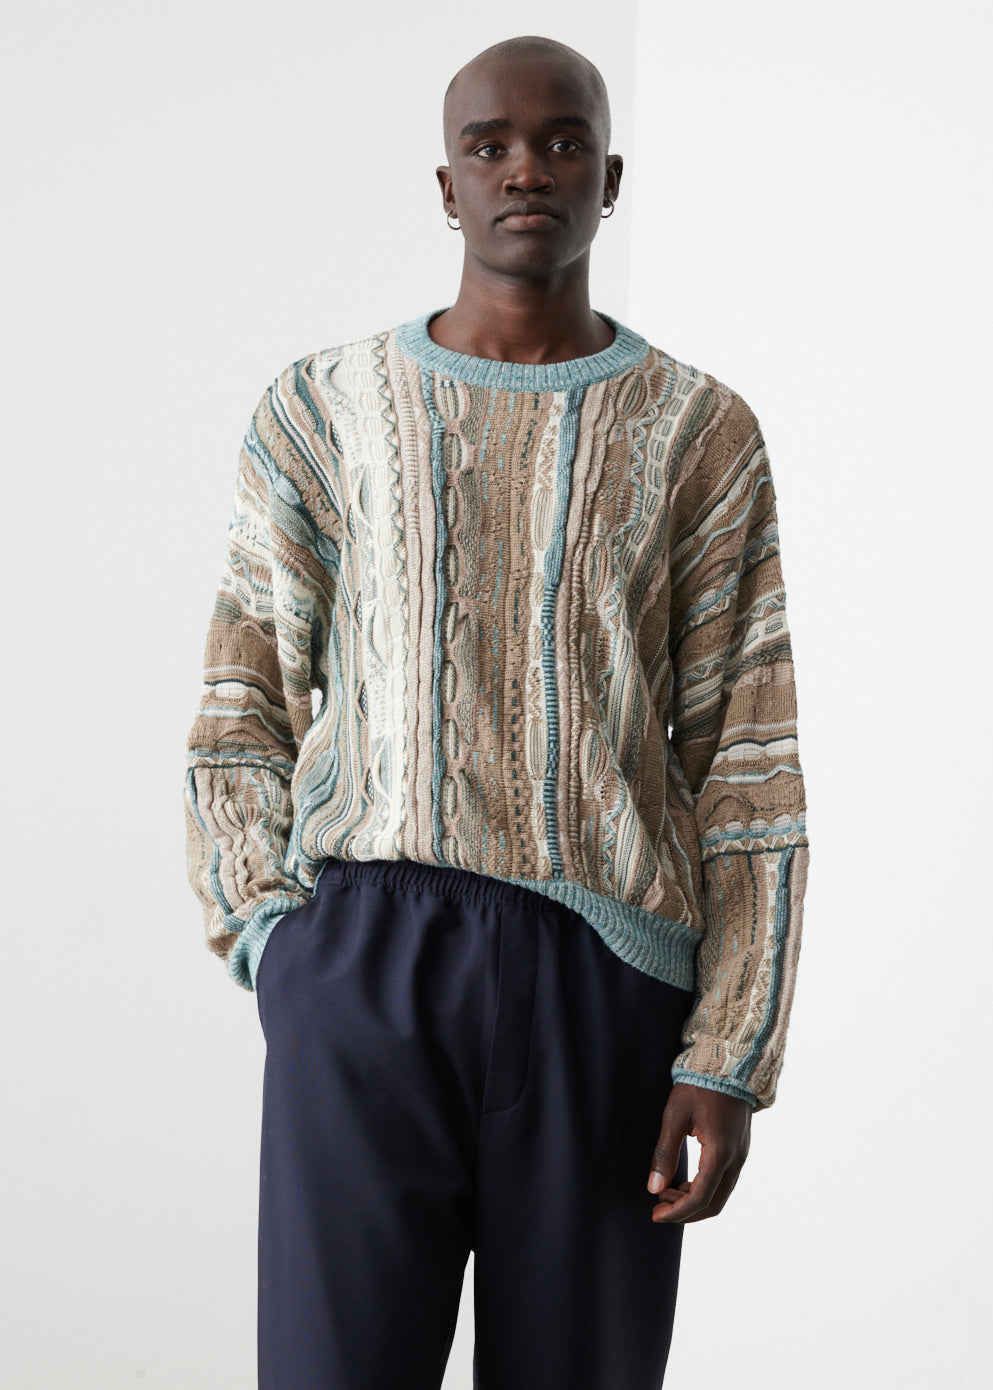 Carry striped jacquard-knit sweatshirt